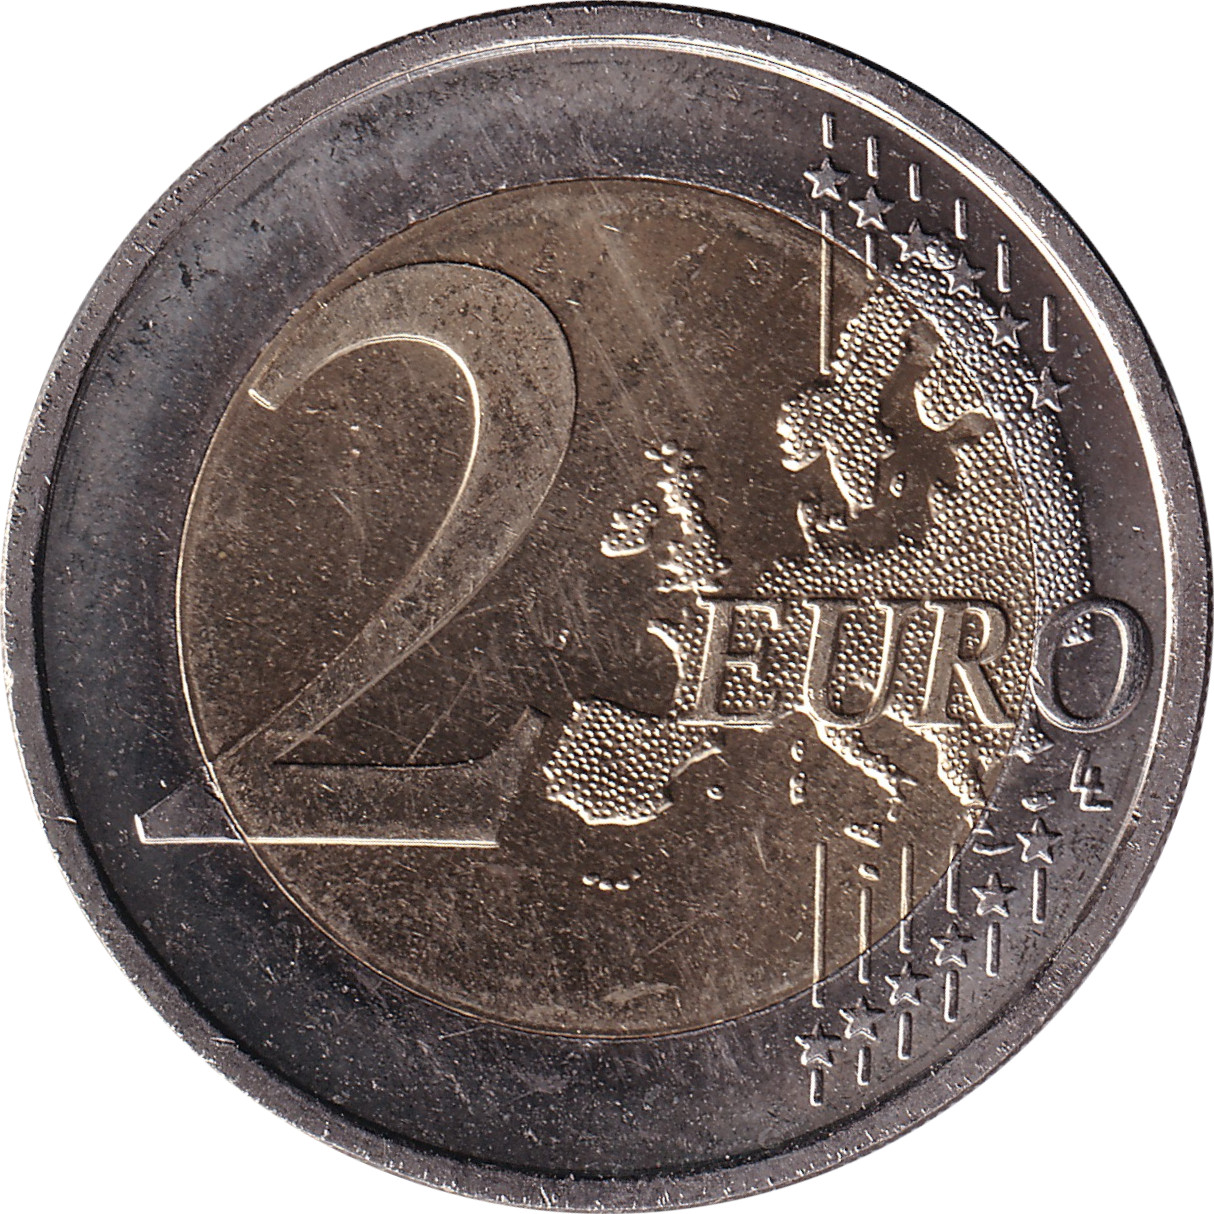 2 euro - Parlement - 150 ans